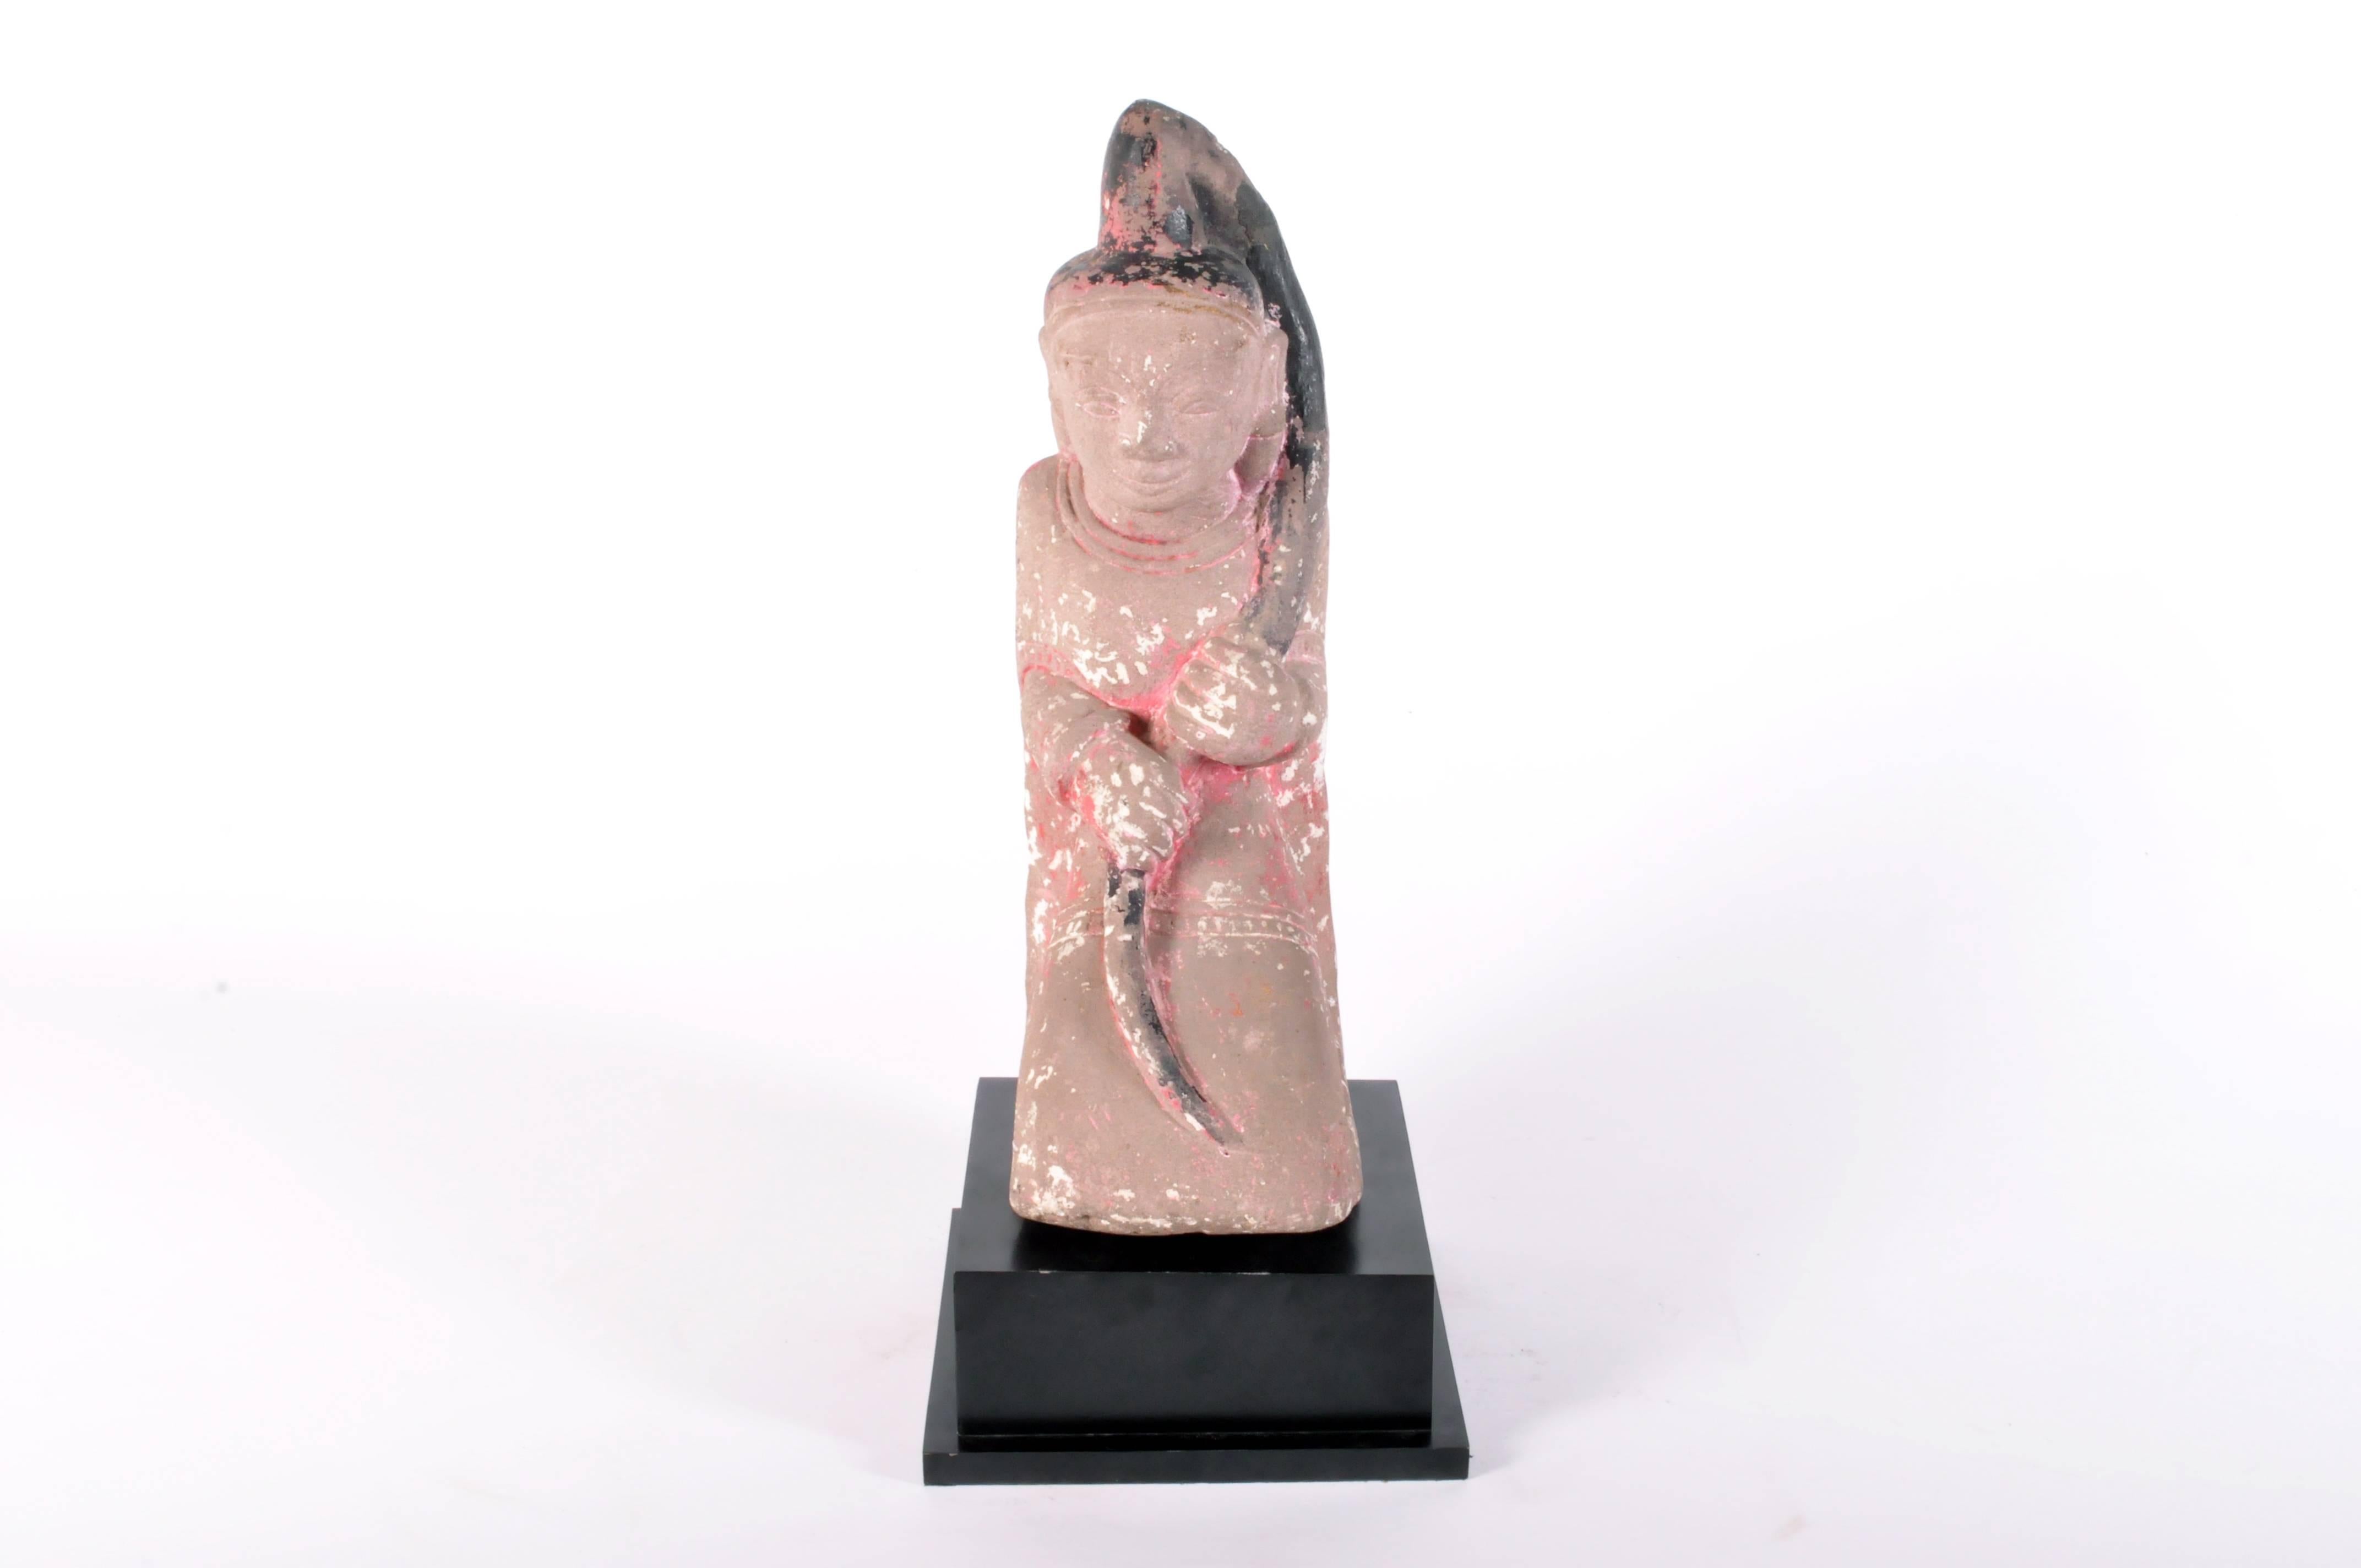 This beautiful stone rain goddess statue is from Thailand, circa 1900.